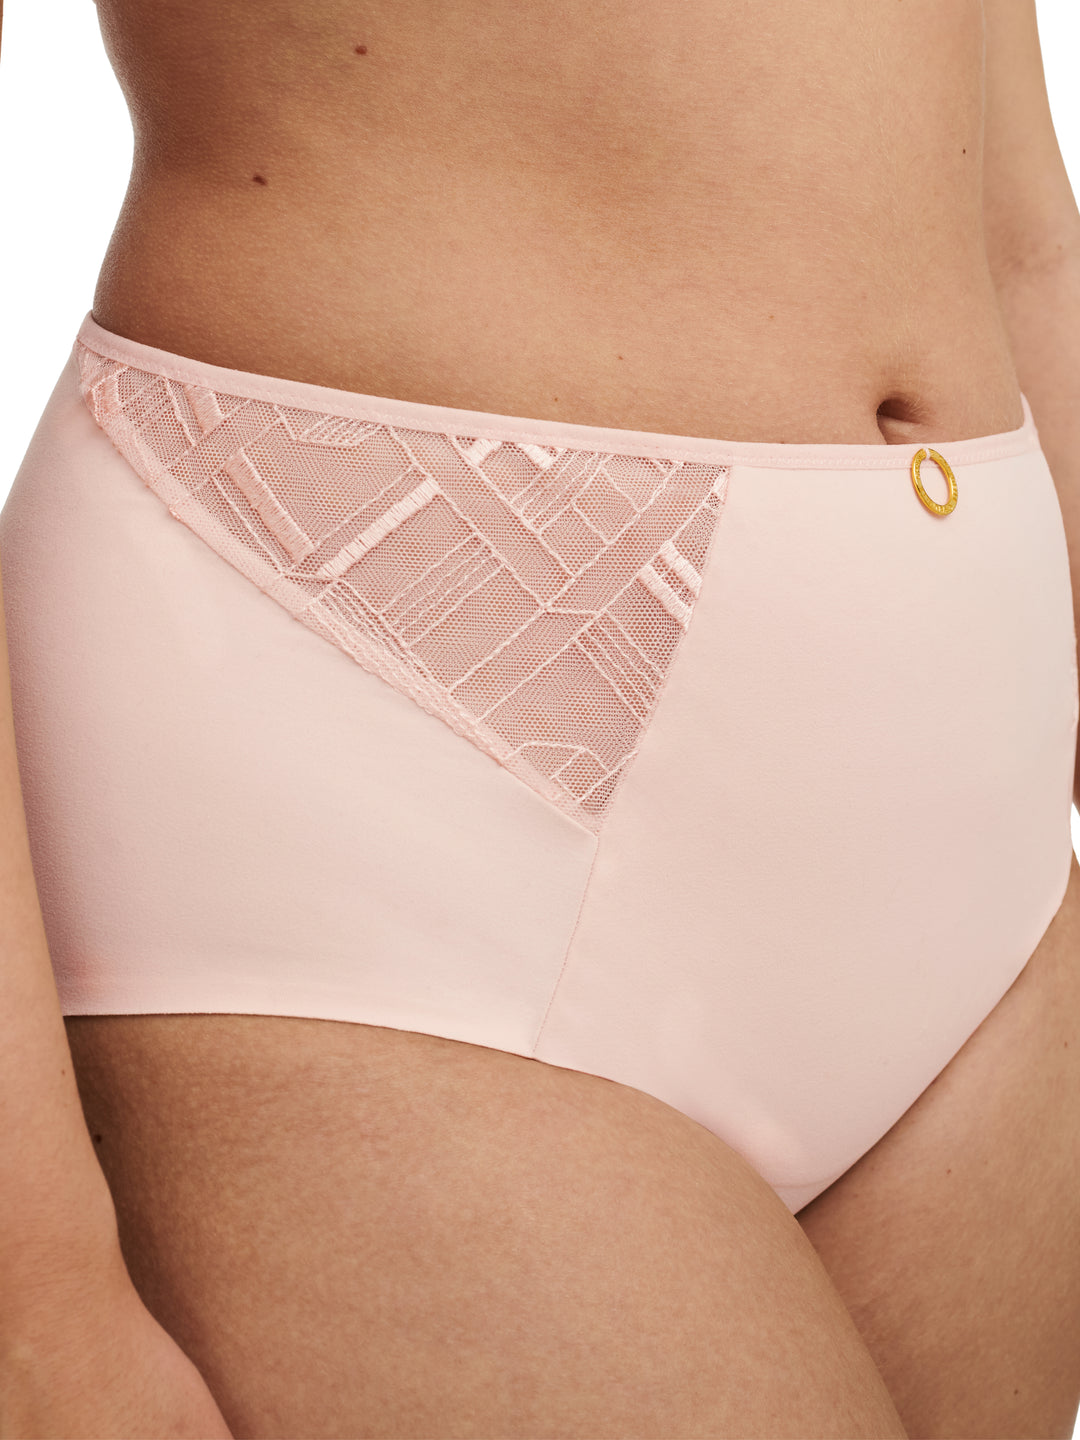 Chantelle - Graphic Support Soutien Taille Haute Slip Complet Taffeta Rose